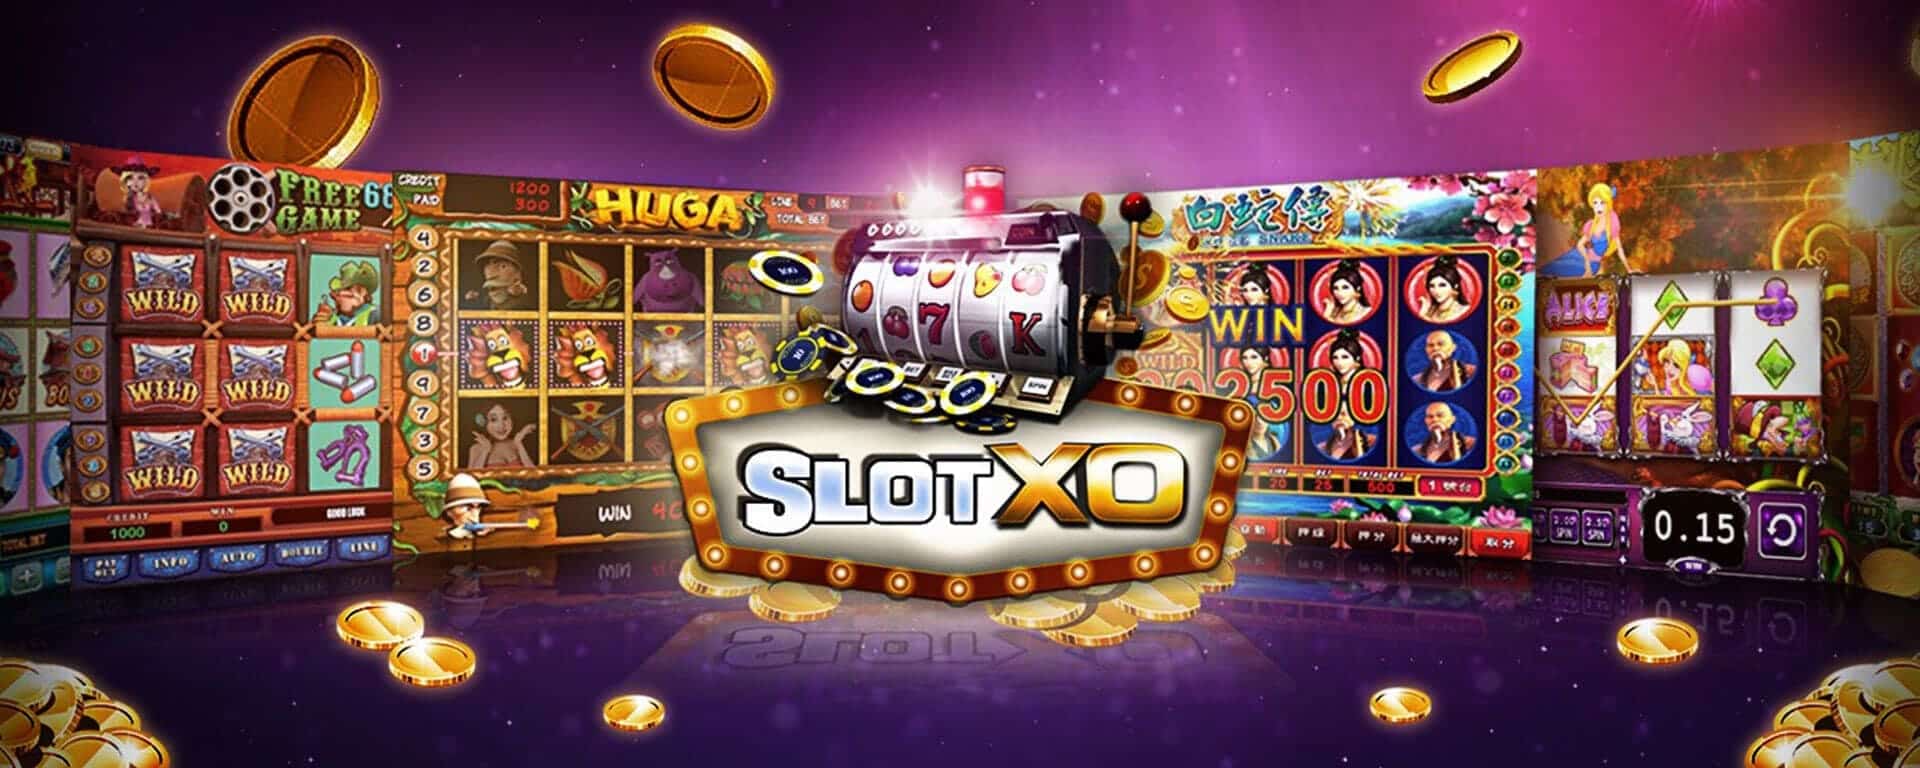 SLOTXO-SLOT-XO-สมัคร slotxo ฝาก 10 รับ 100-แจกเครดิต ทดลอง เล่น ฟรี 100 ถอน ได้